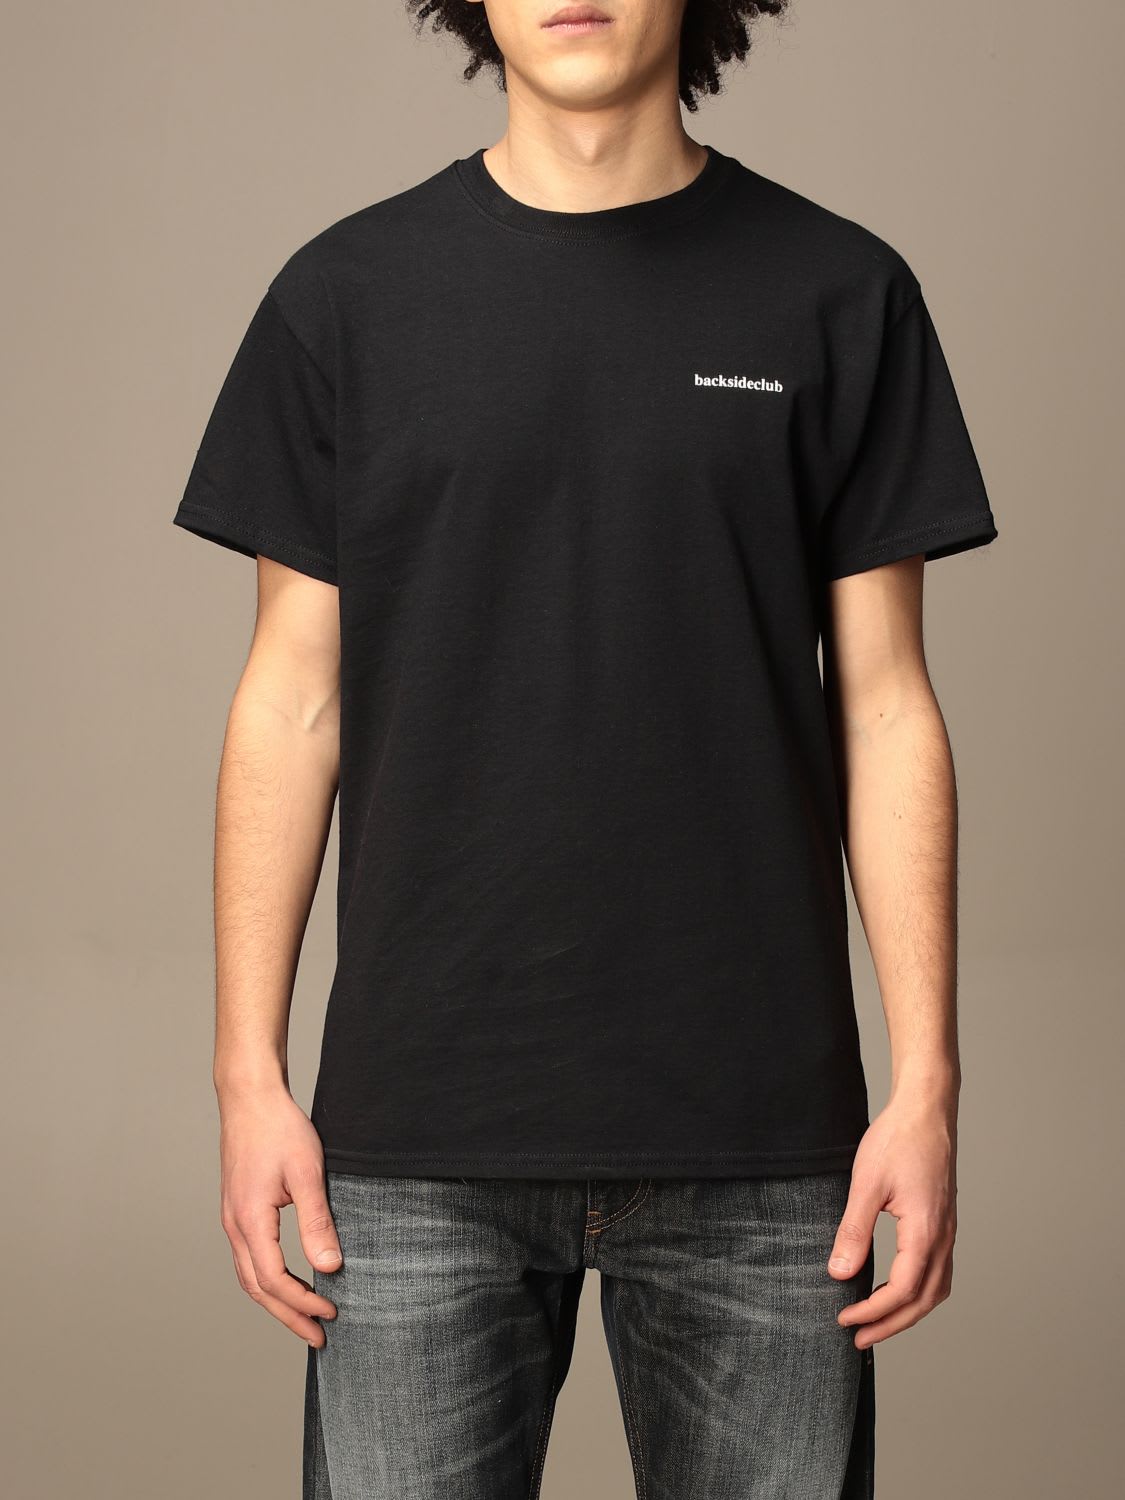 Backsideclub T-shirt Batdino Backsideclub T-shirt In Cotton With Print